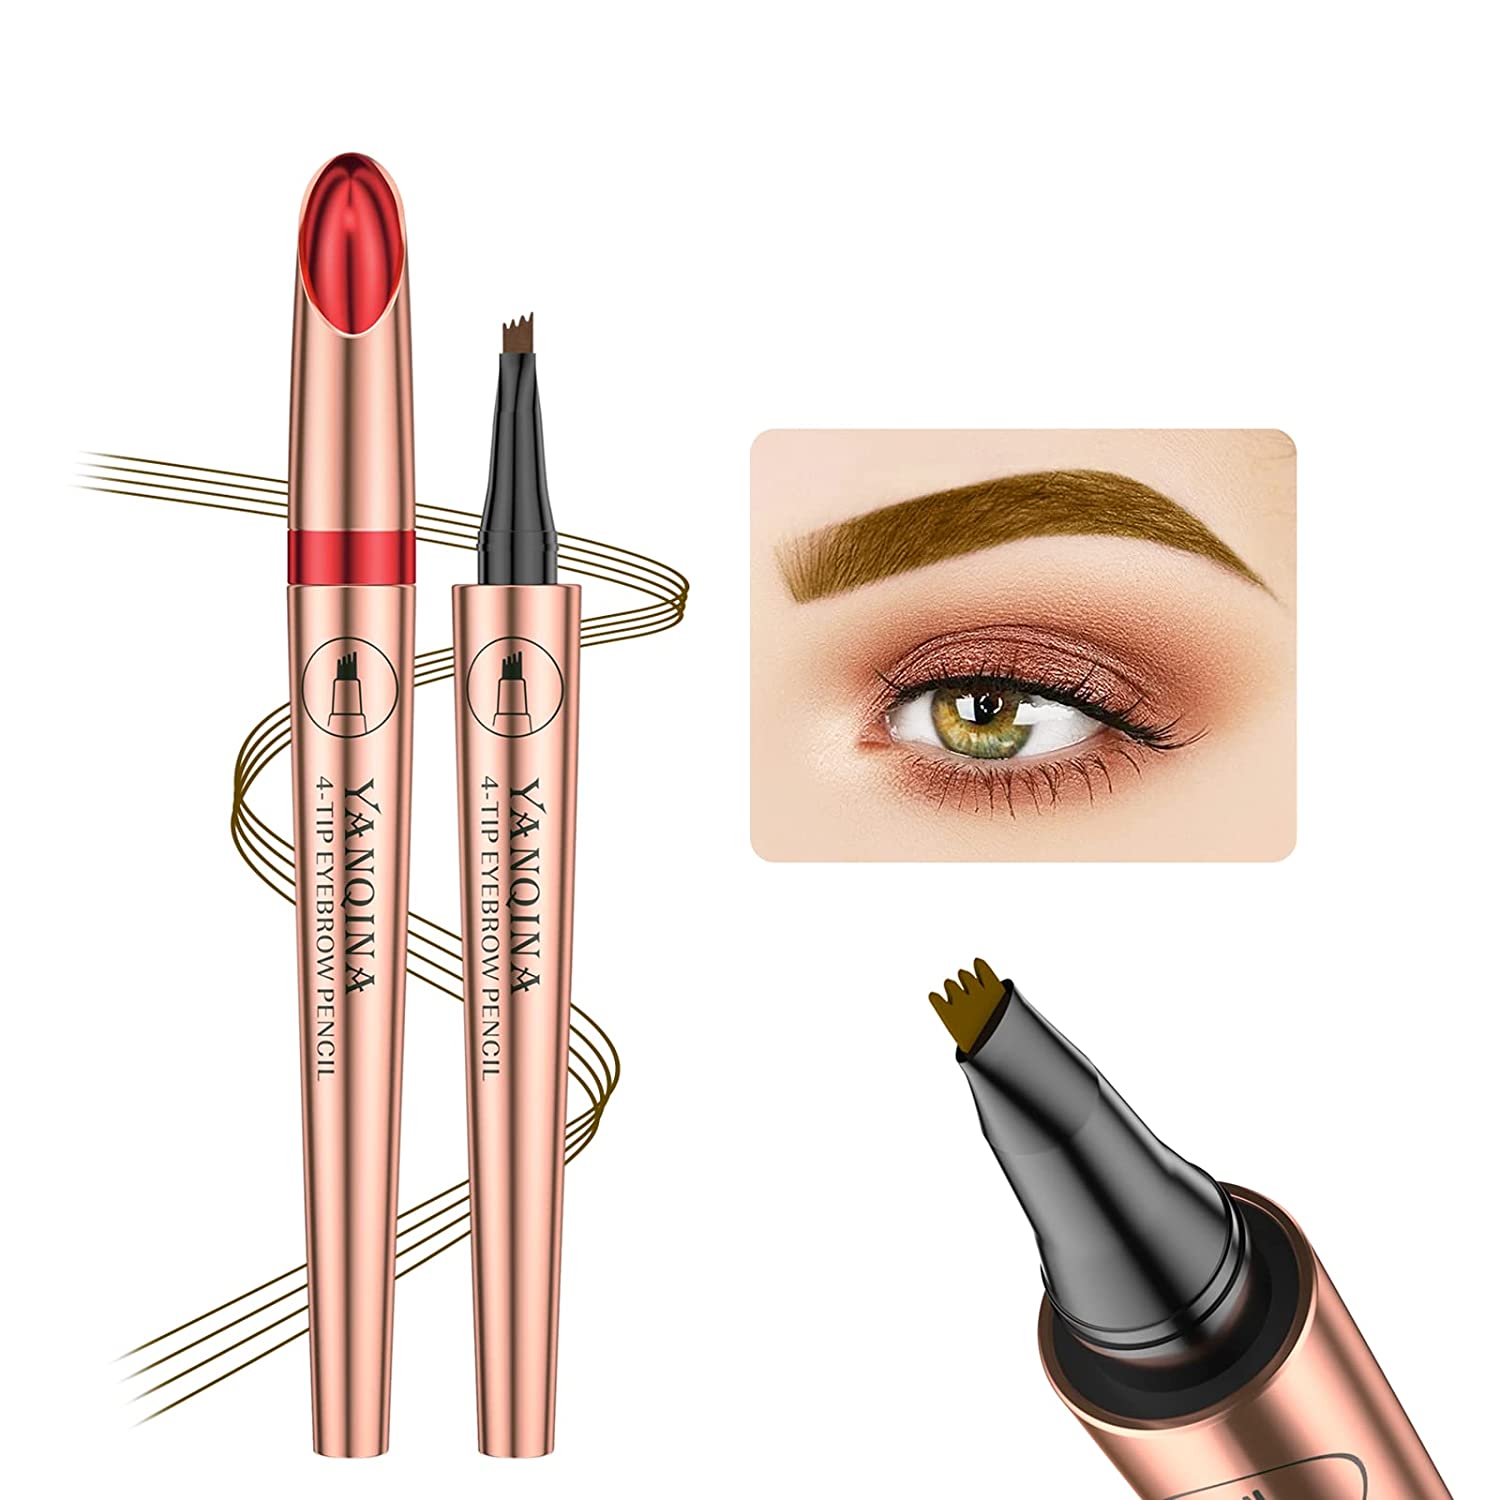 Eyebrow Pencil, Eyebrow Pen, Professional MakeUp Eyebrow Pencil, 24 Hours Long-Lasting, Smudge-Resistant, Natural Looking (Dark Brown)